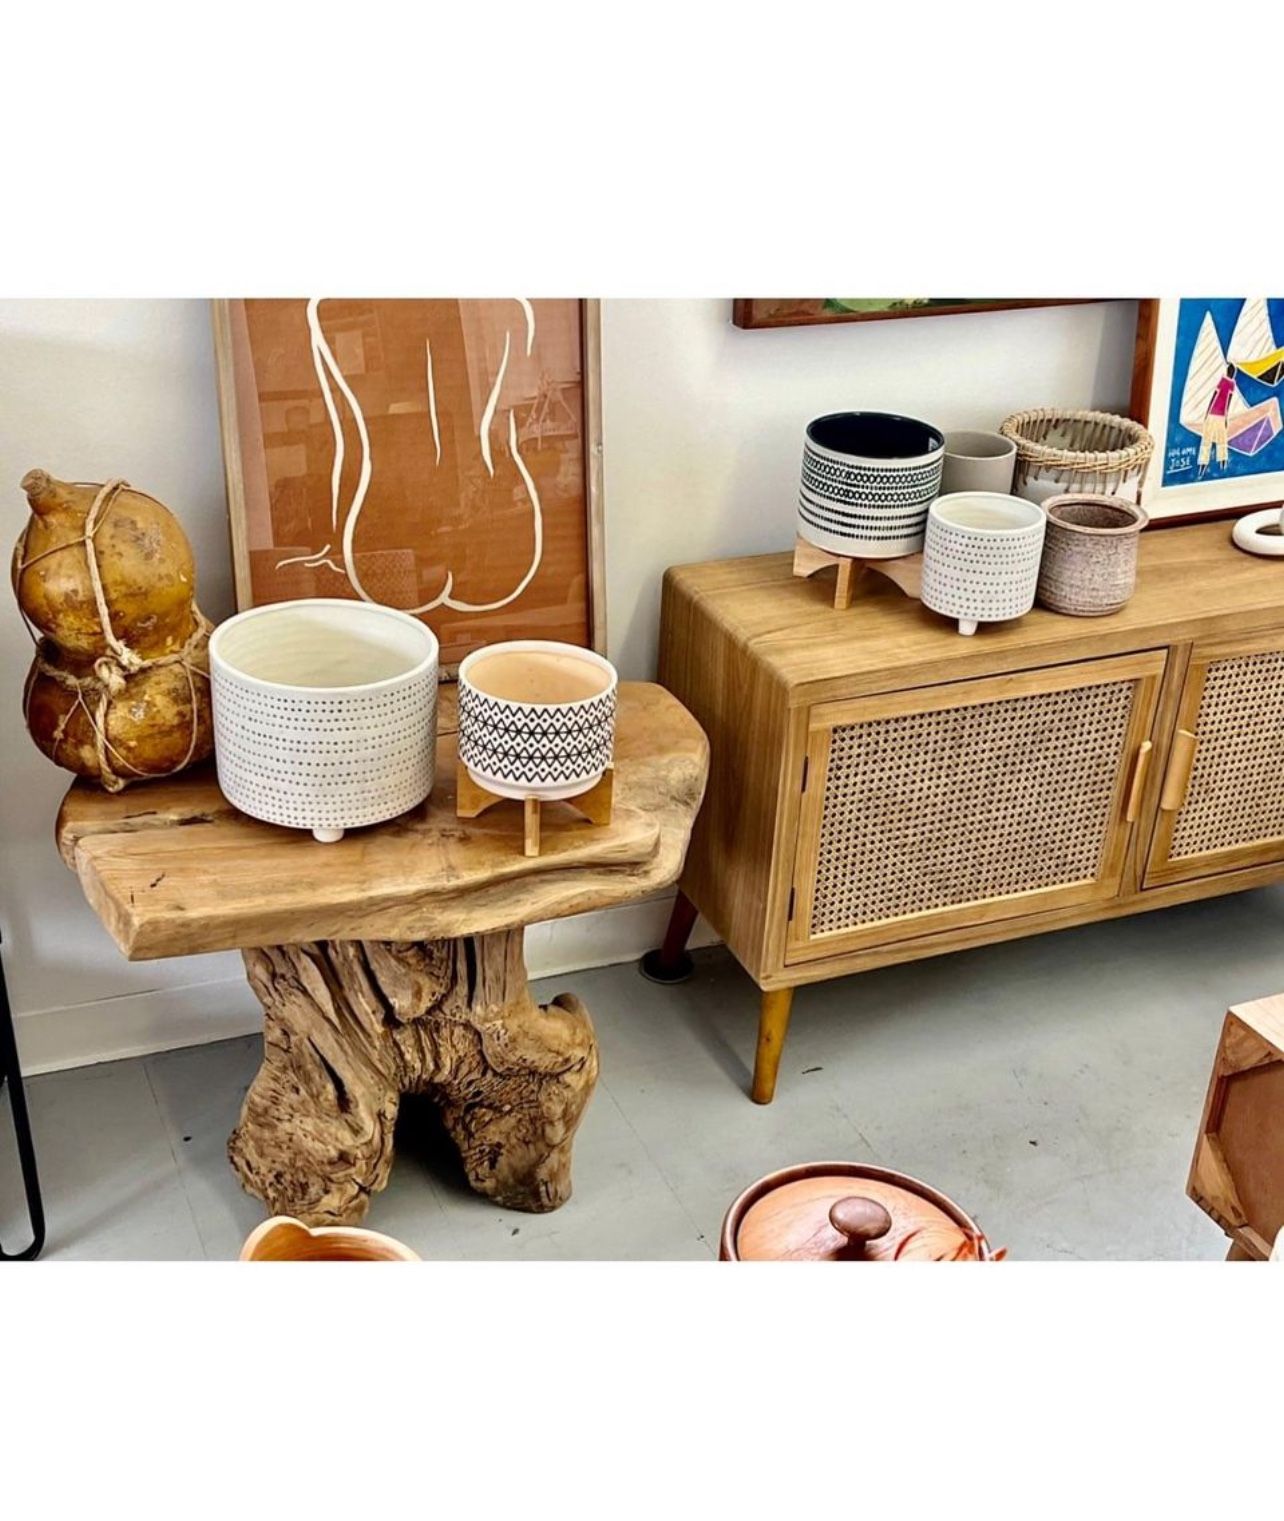 READ AD New Credenza Art Planter Plants Pot Vase Dresser Table Sofa Teak Bookcase Mirror Desk Lamp Pottery Wood Ceramics Couch Loveseat Chair